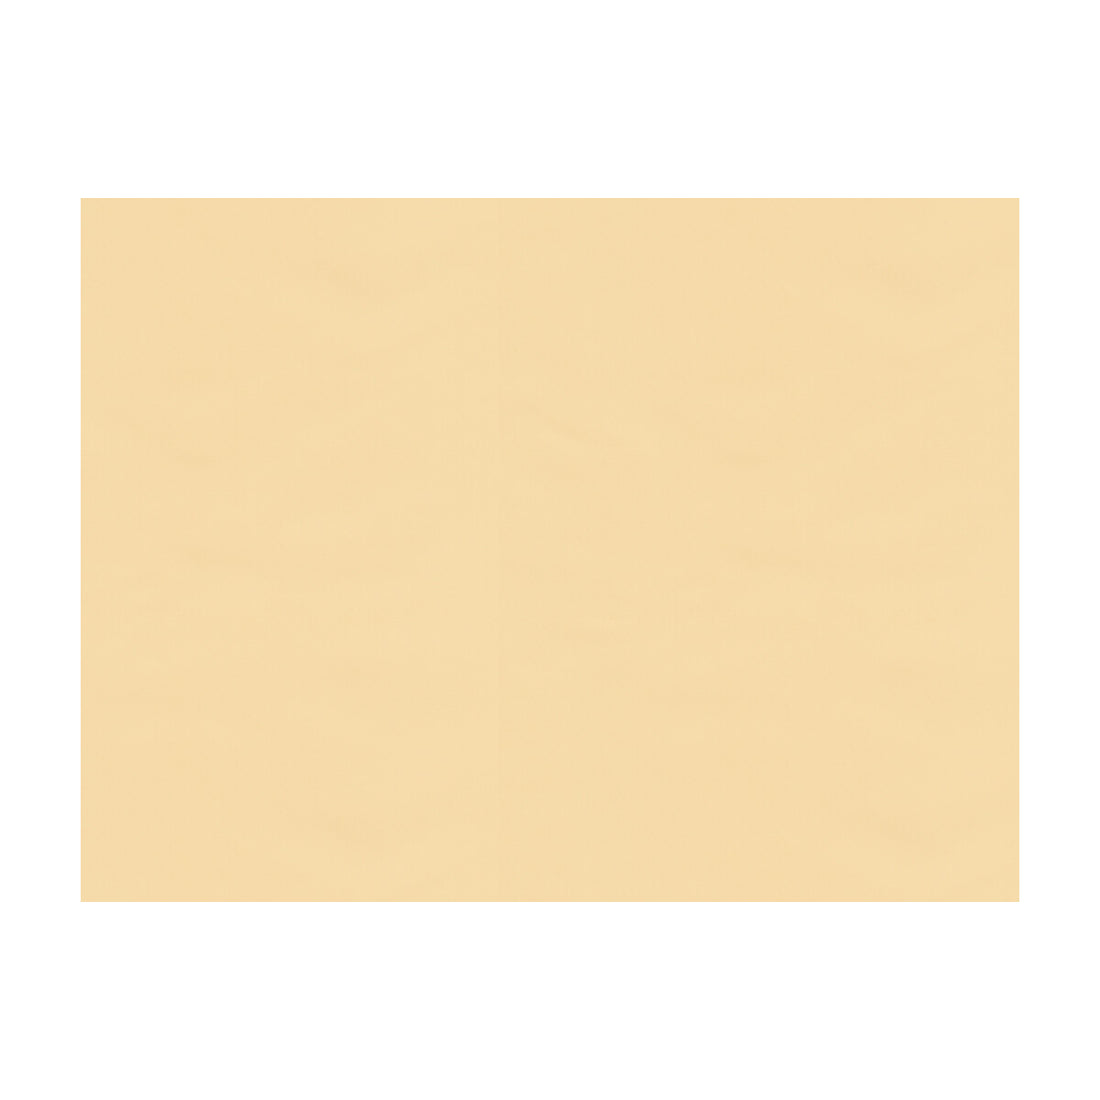 Ninon Taffetas fabric in beige color - pattern BR-81081.PPA.0 - by Brunschwig &amp; Fils